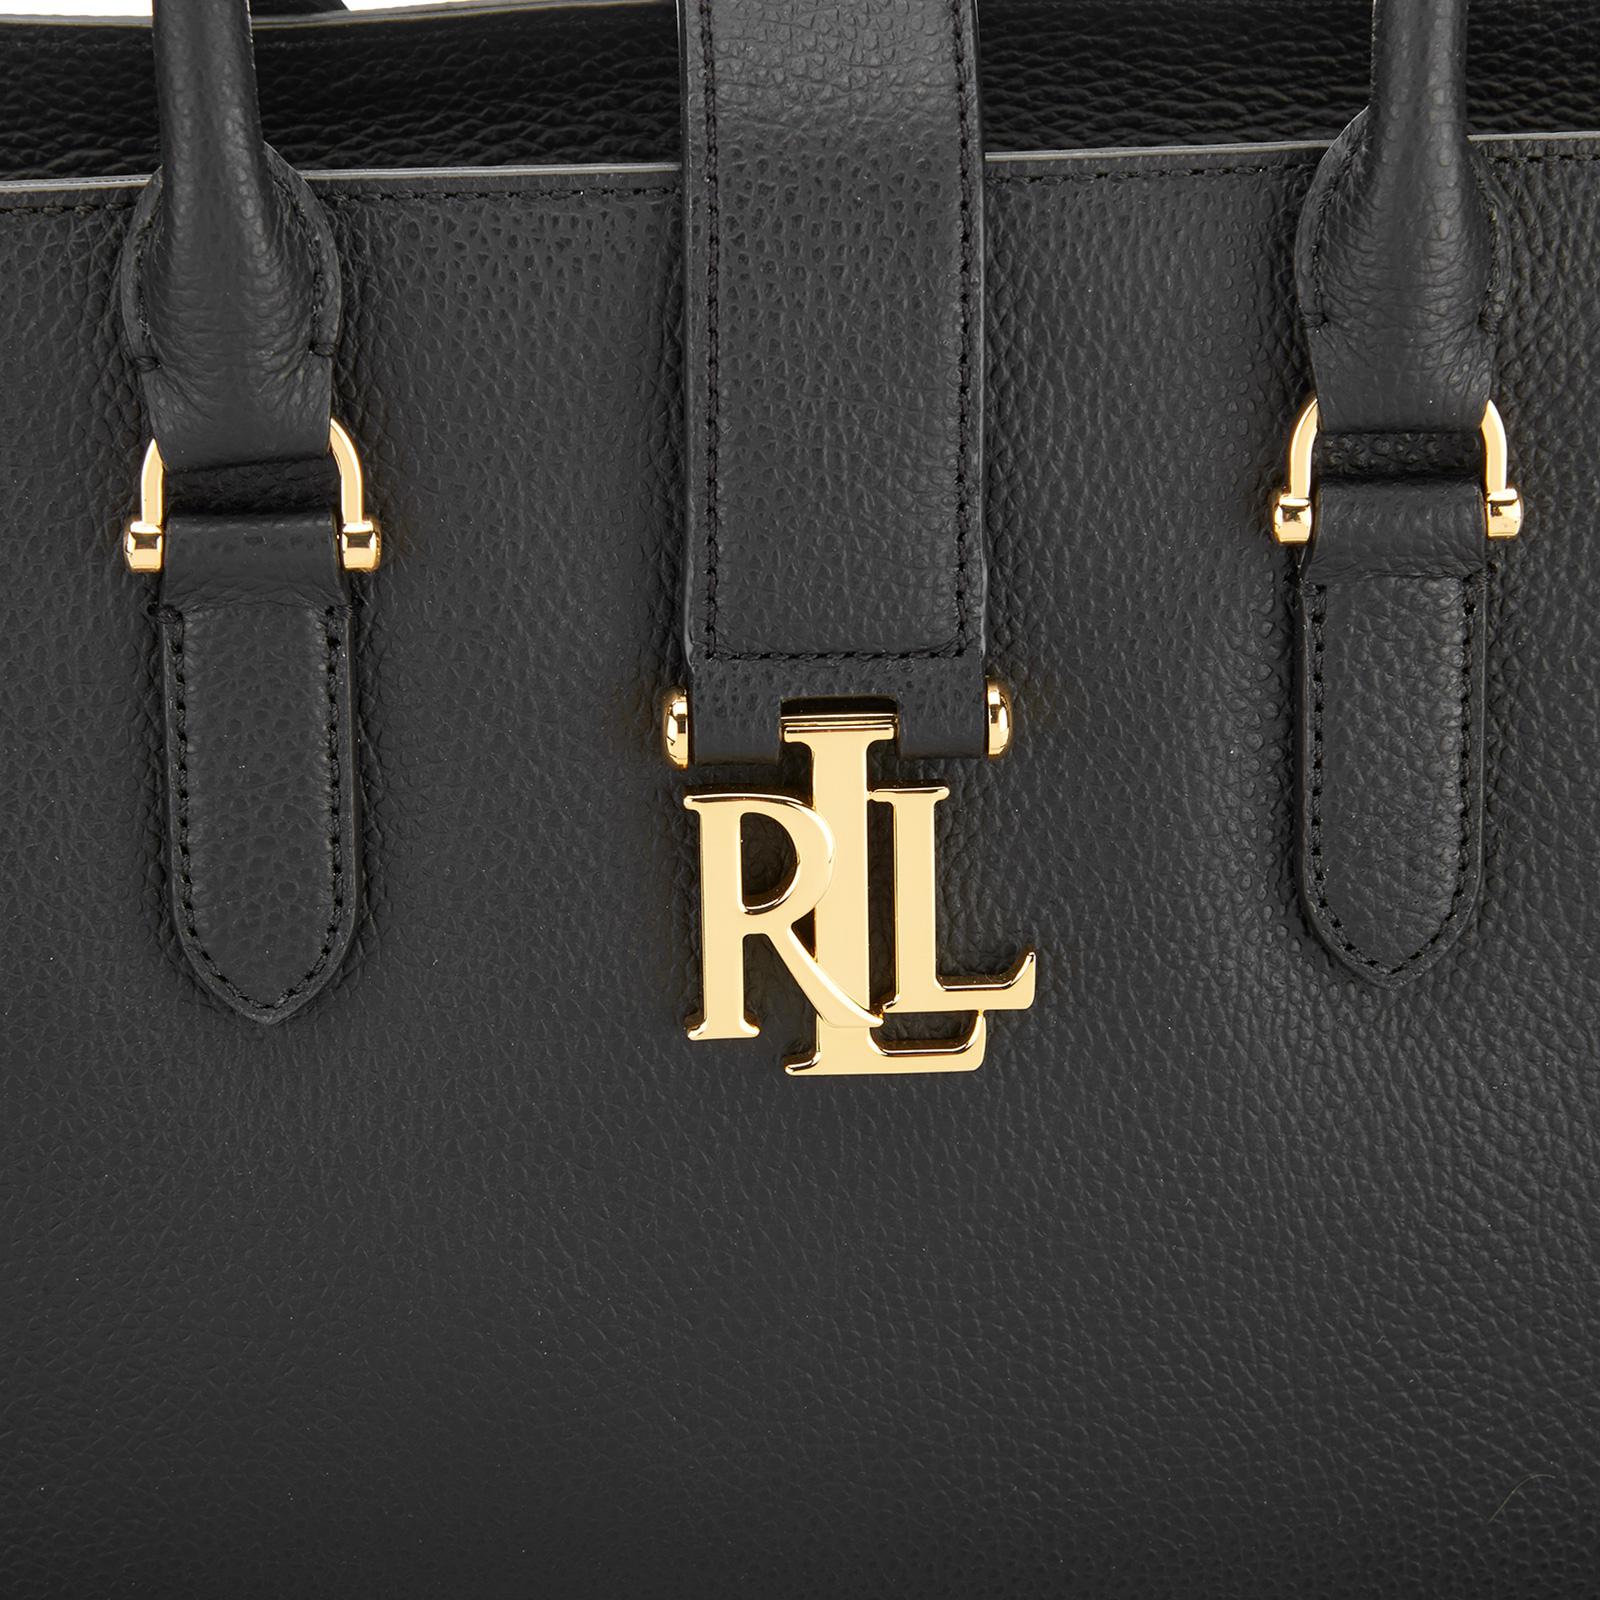 Lauren by Ralph Lauren Carrington Bethany Shopper Bag in Black | Lyst